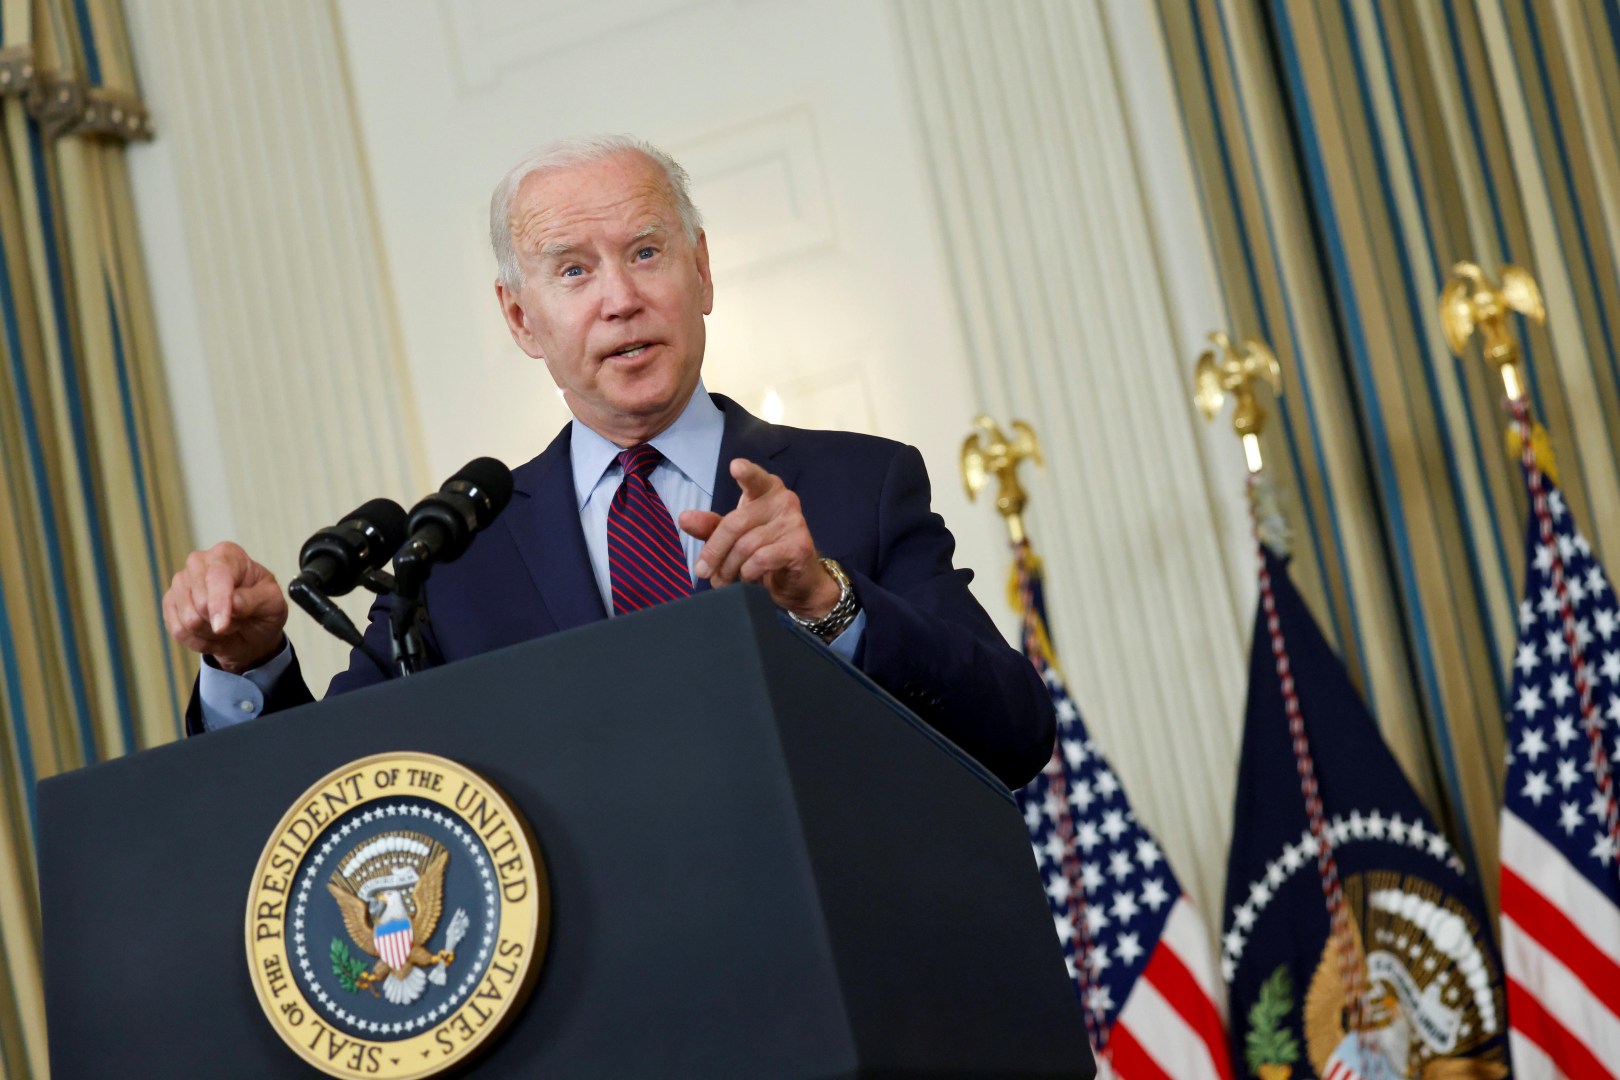 Biden called on Senate Republicans to raise the debt ceiling.